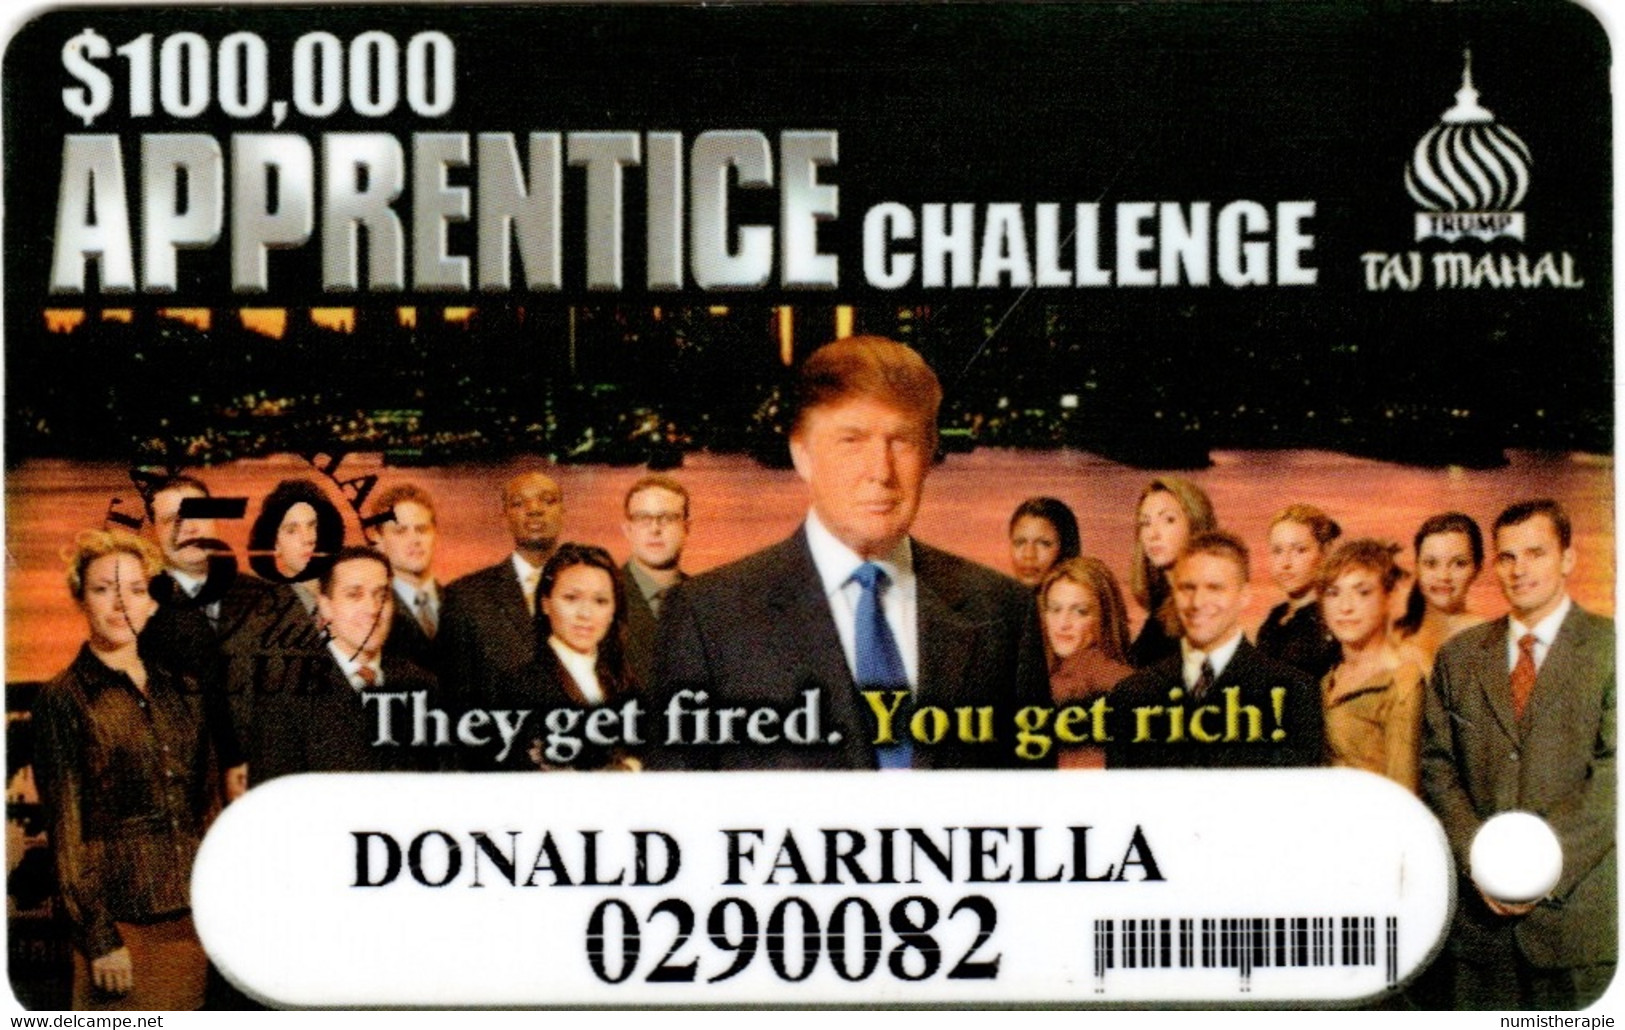 Casino Trump Taj Mahal Atlantic City NJ : $100,000 Apprentice Challenge - Casino Cards